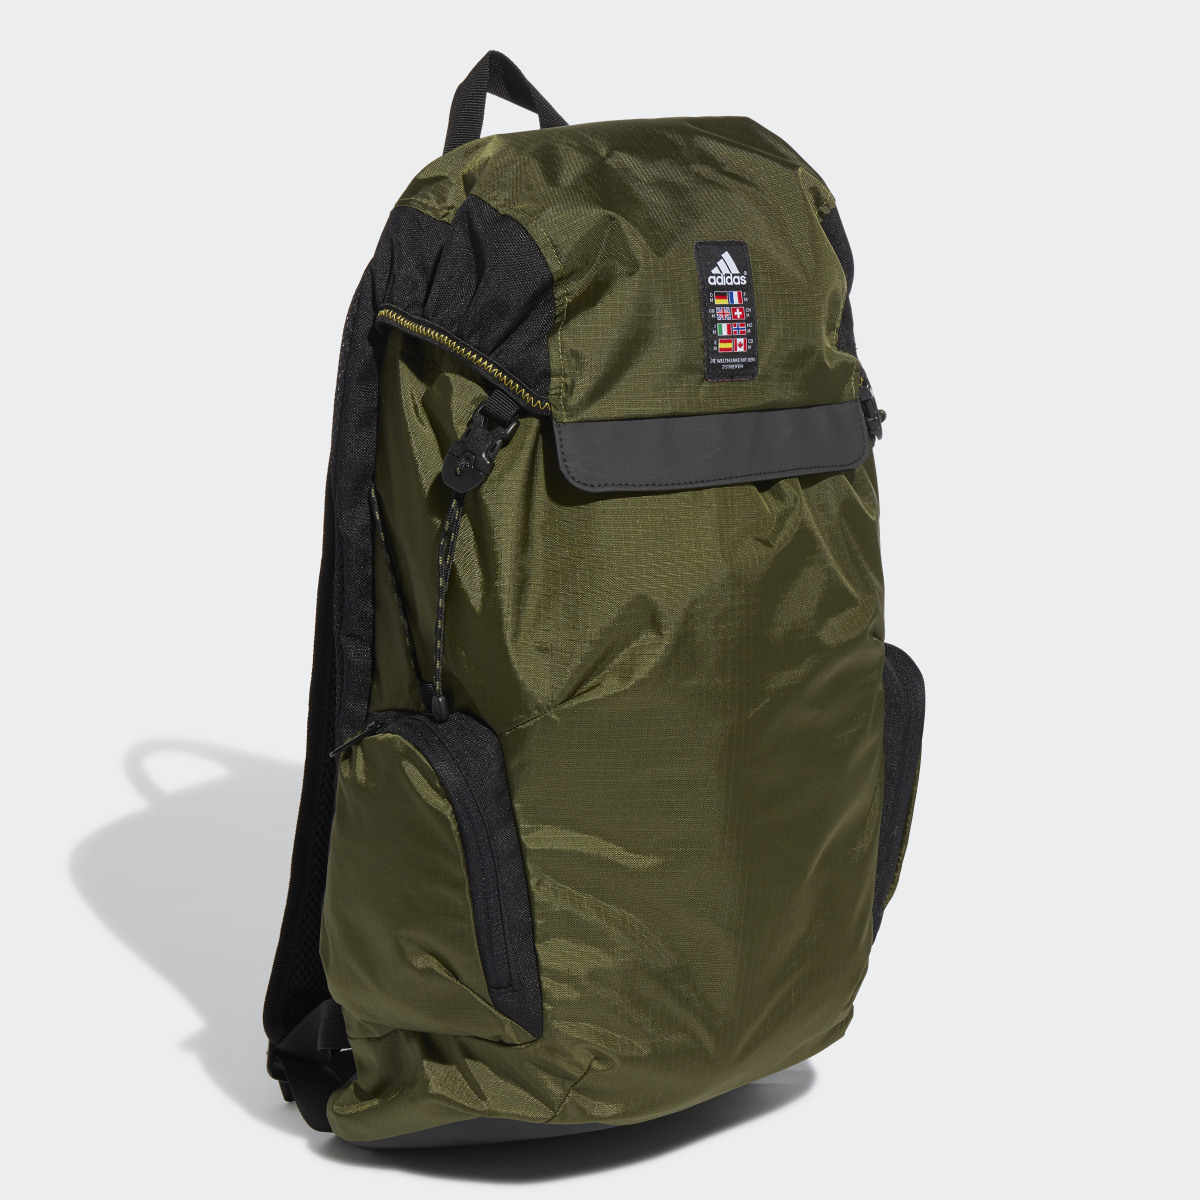 Adidas Explorer Primegreen Backpack. 4